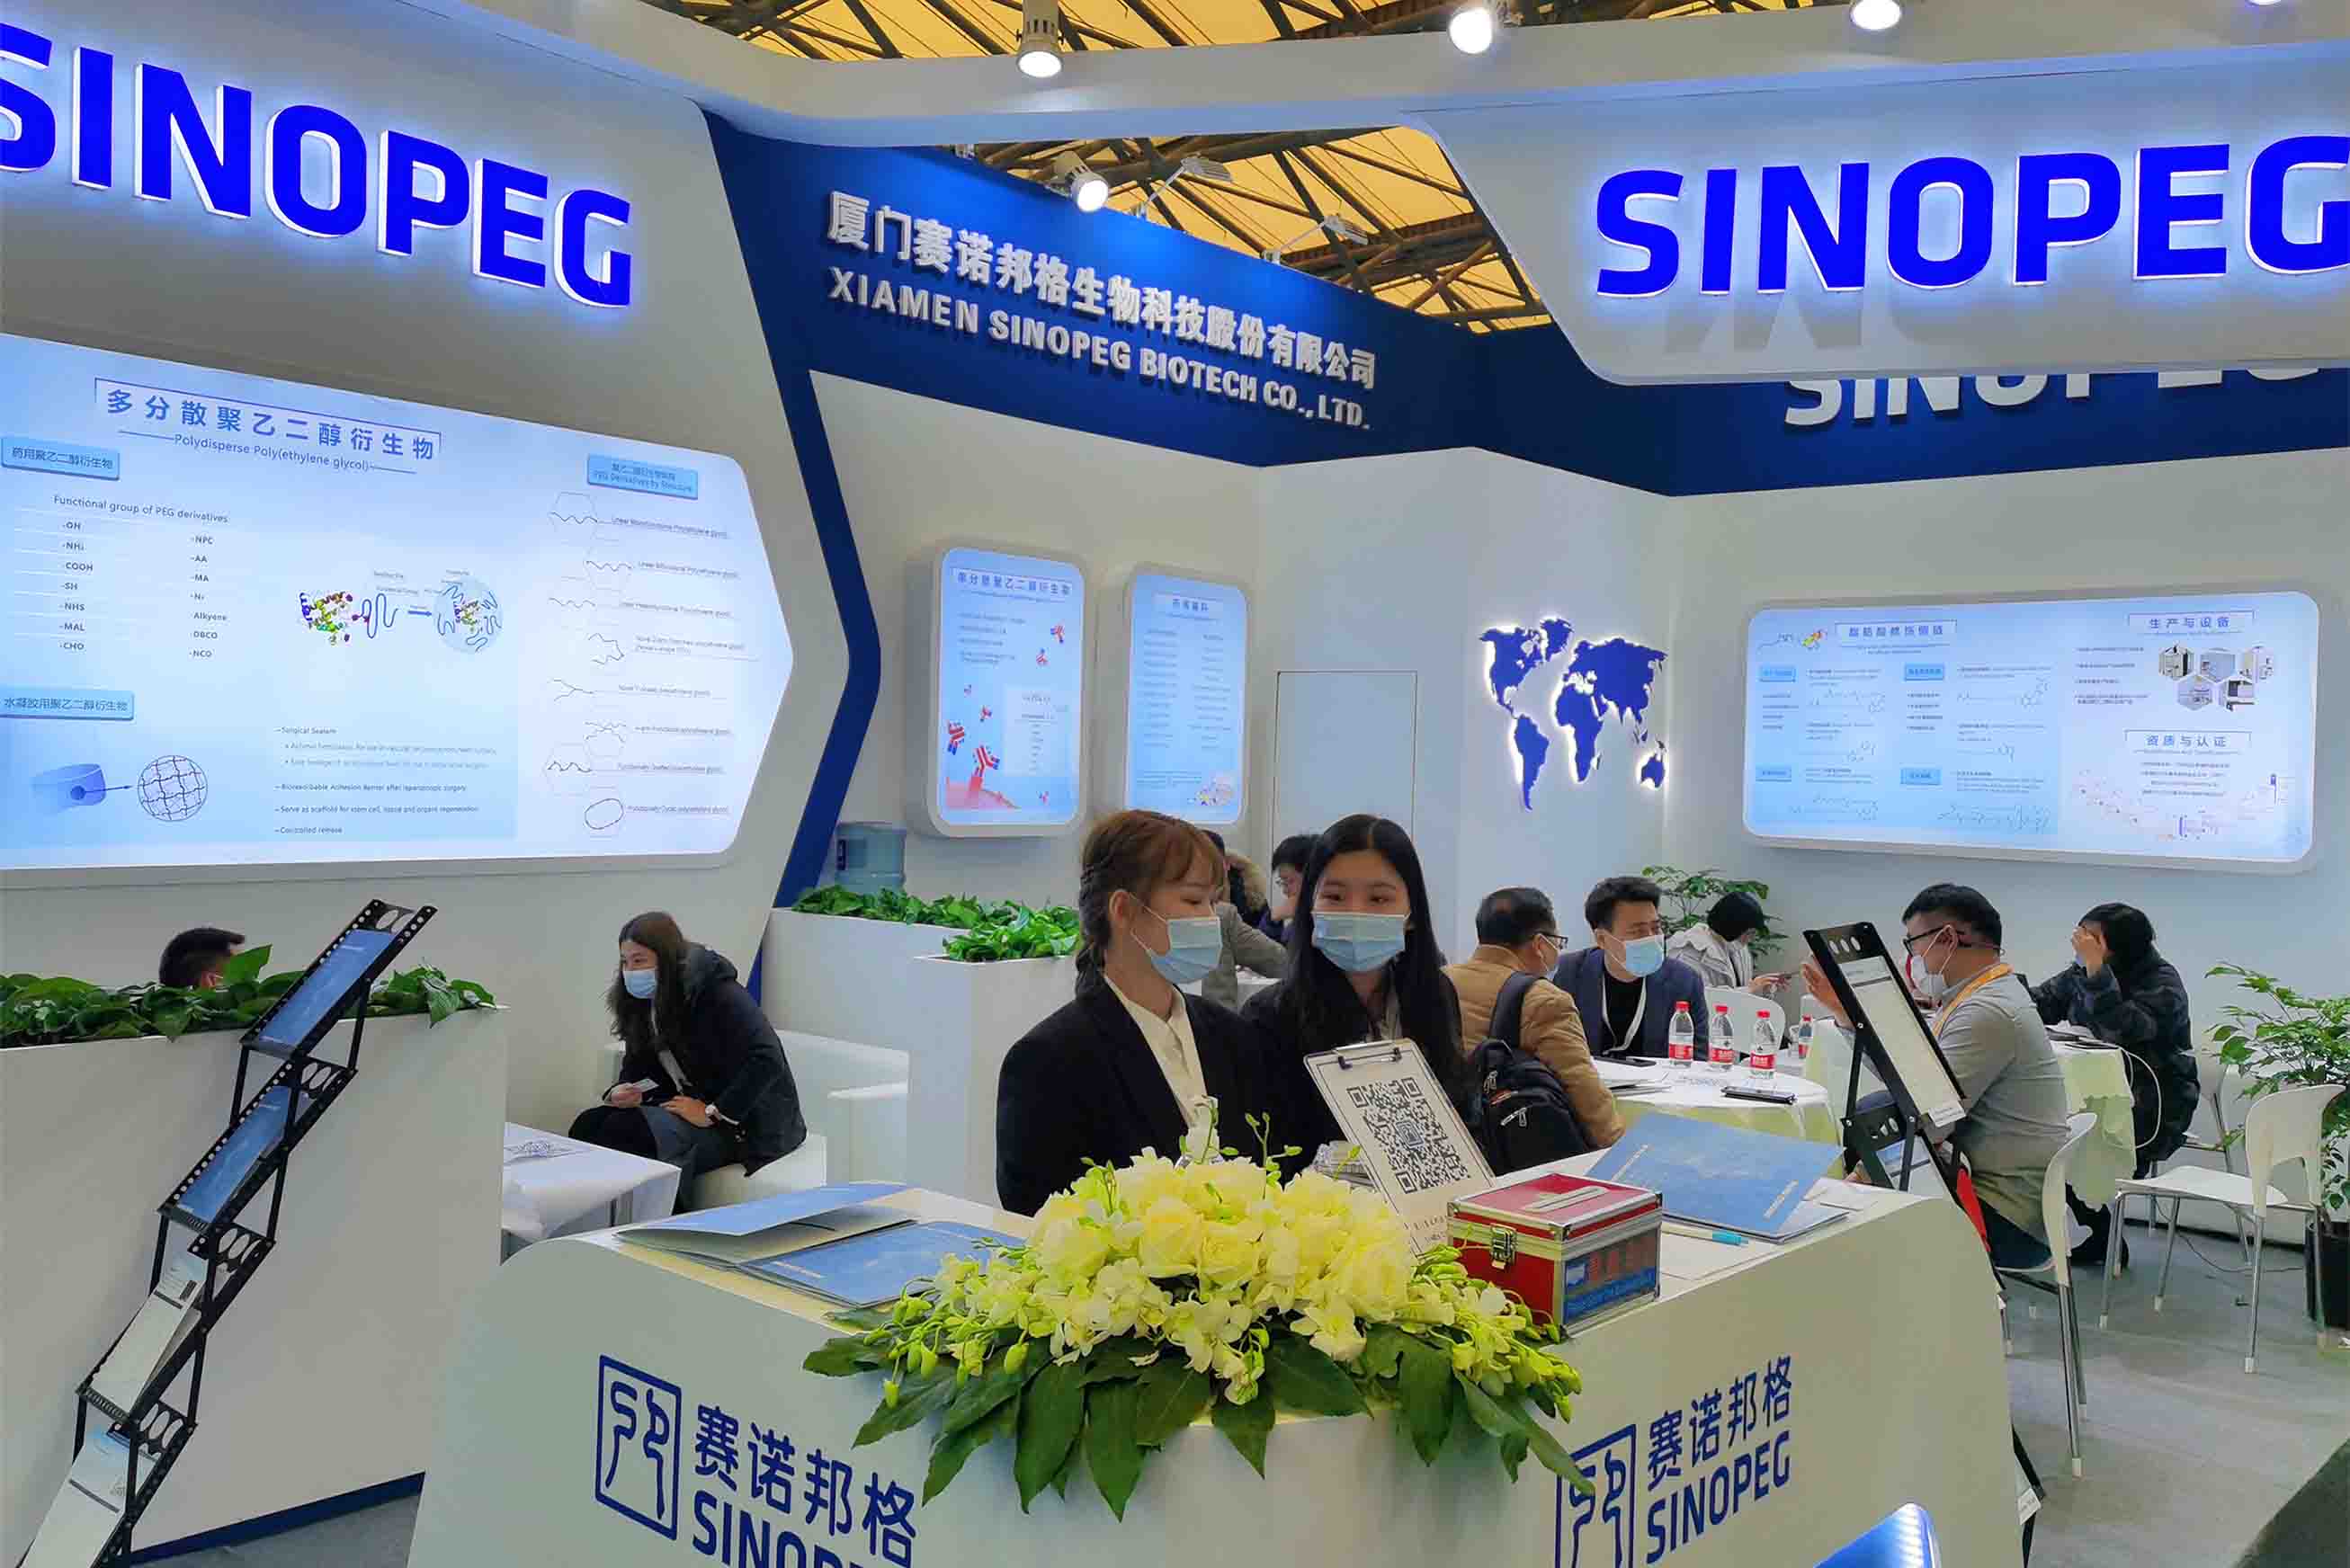  SINOPEG CPhI で実質的な成果を上げました中国 2020 